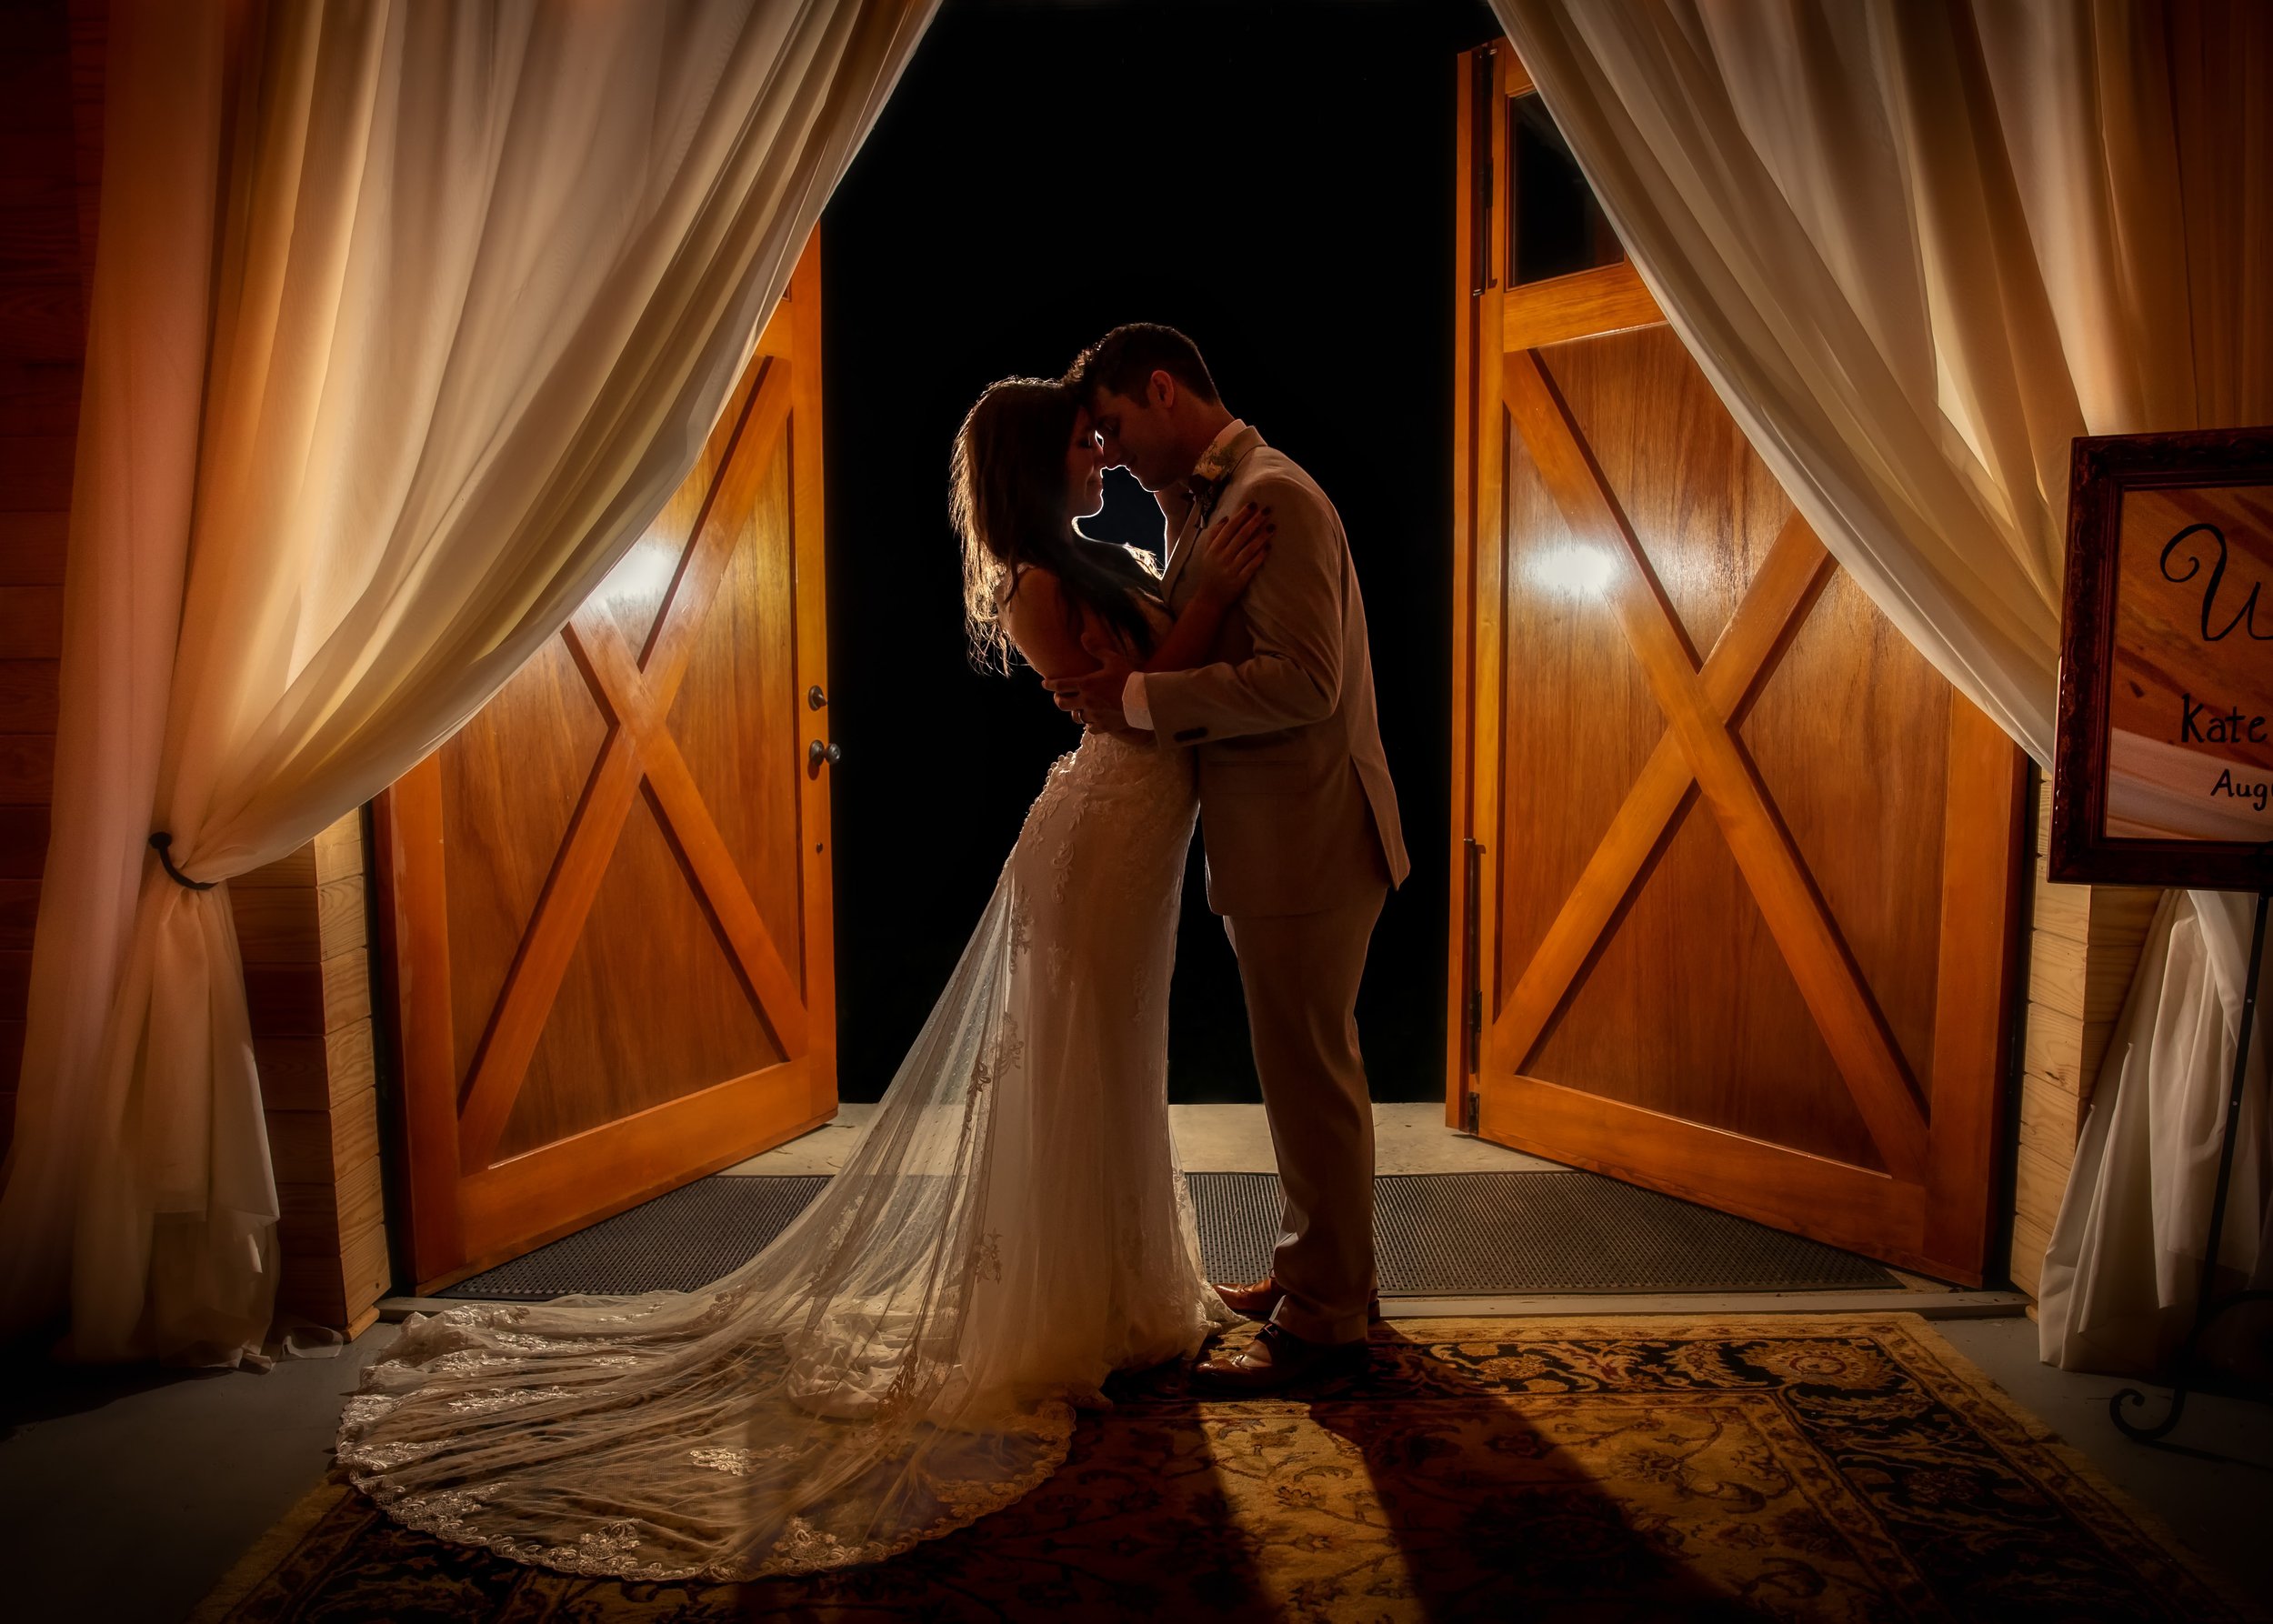 Wedding-Couple-Dramatic-Night-Pose-Curtains-Doors.jpg